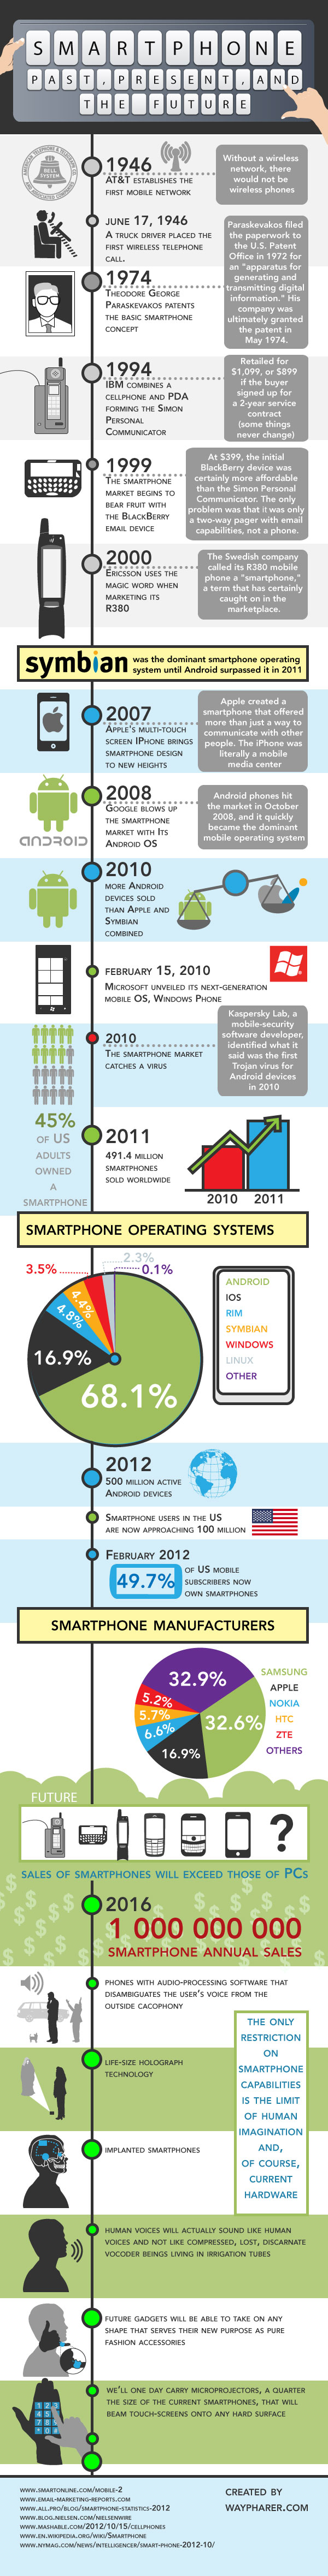 Smartphones Past Present and Future (Infographic)